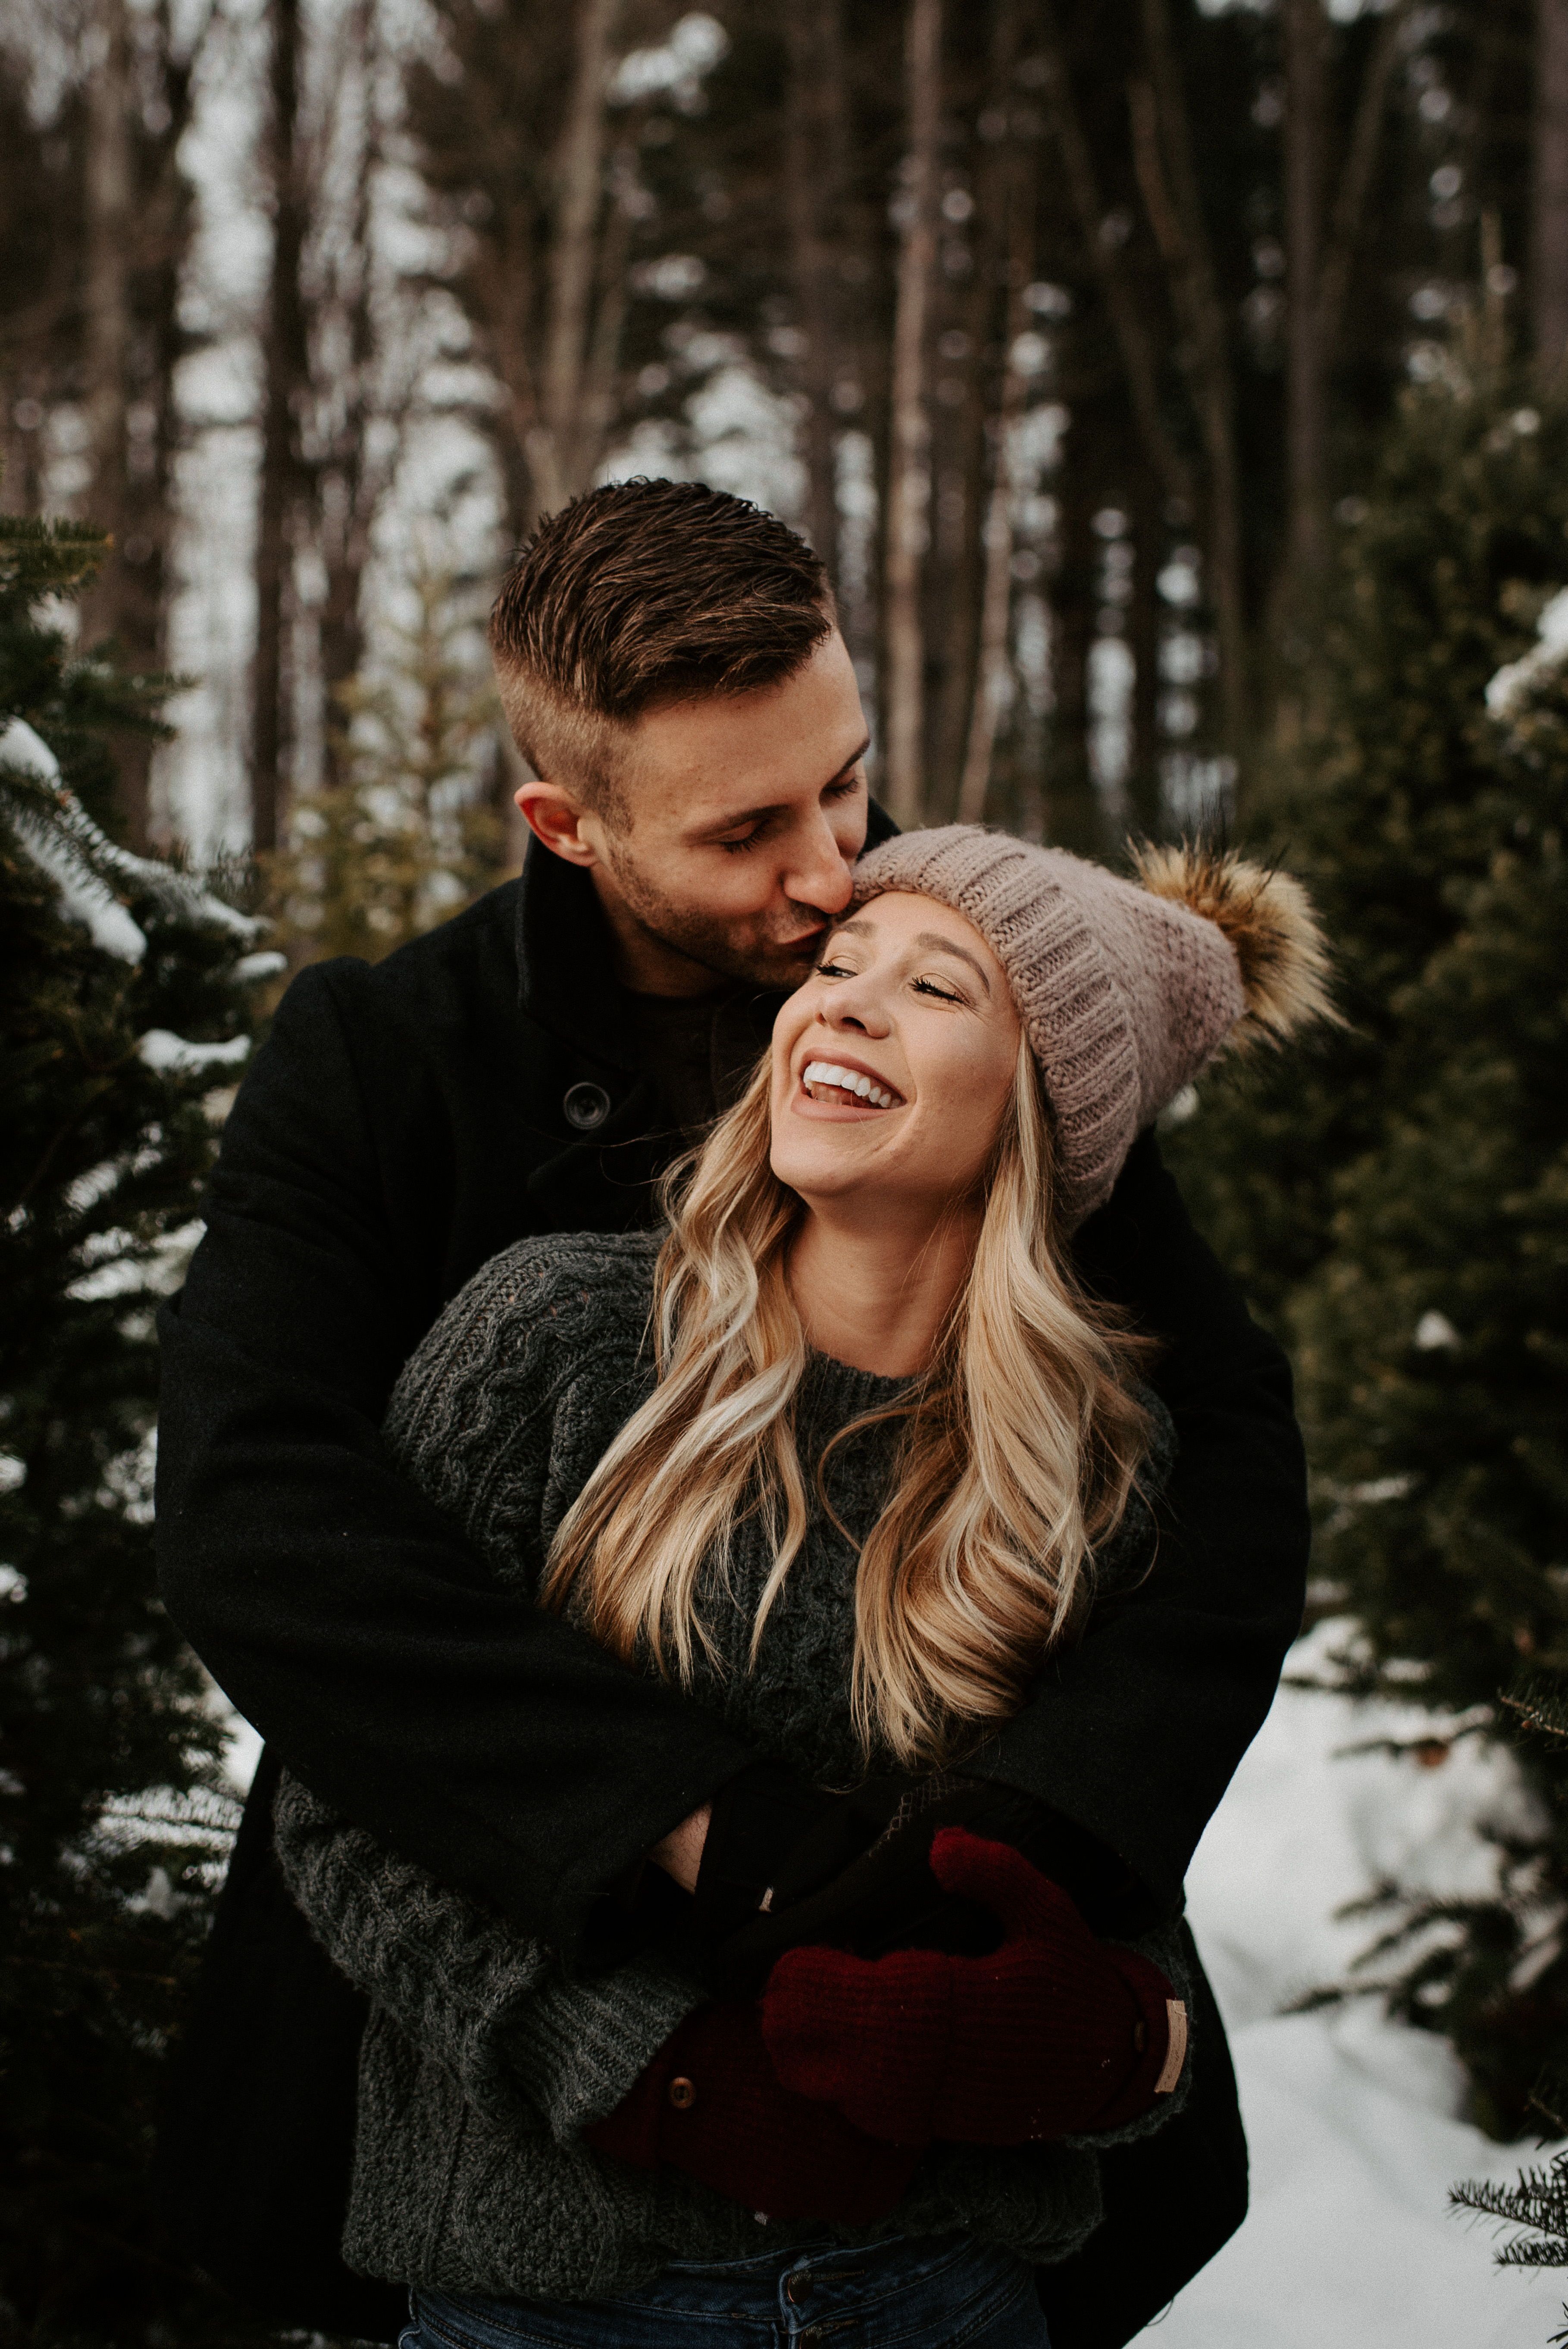 Winter Couples Session on a Christmas Tree Farm | Oregon Wedding Photographer -   18 christmas photoshoot couples ideas